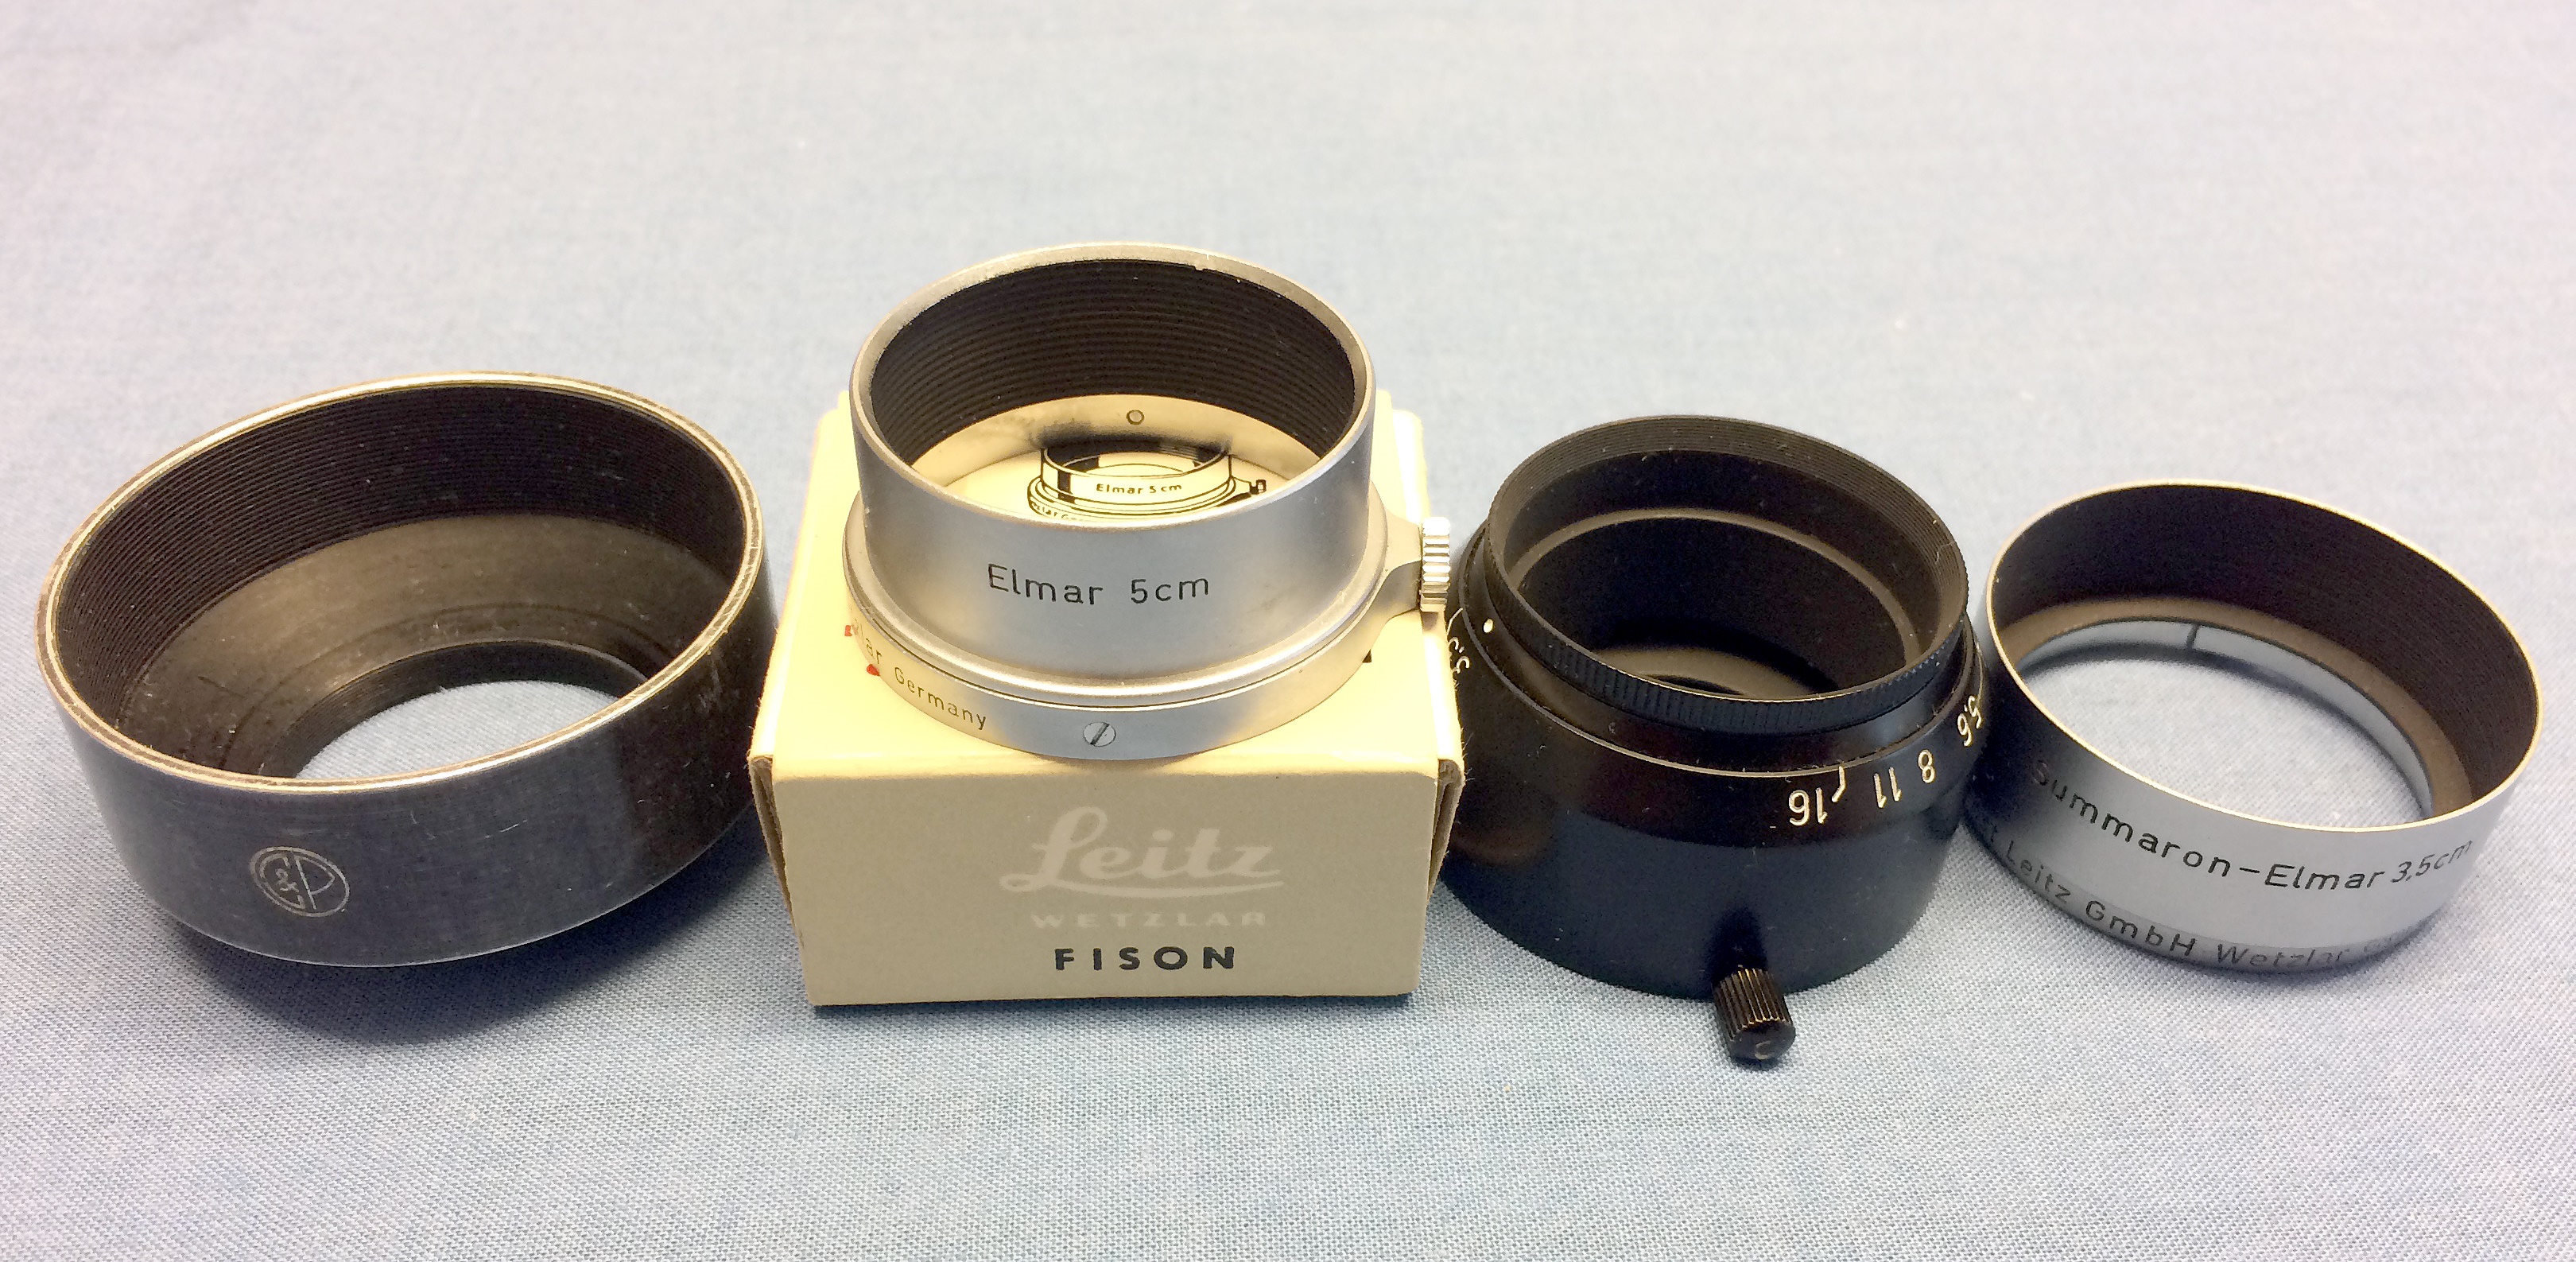 Leitz Elmar FISON & Other Leica Lens Hoods. - Image 3 of 3